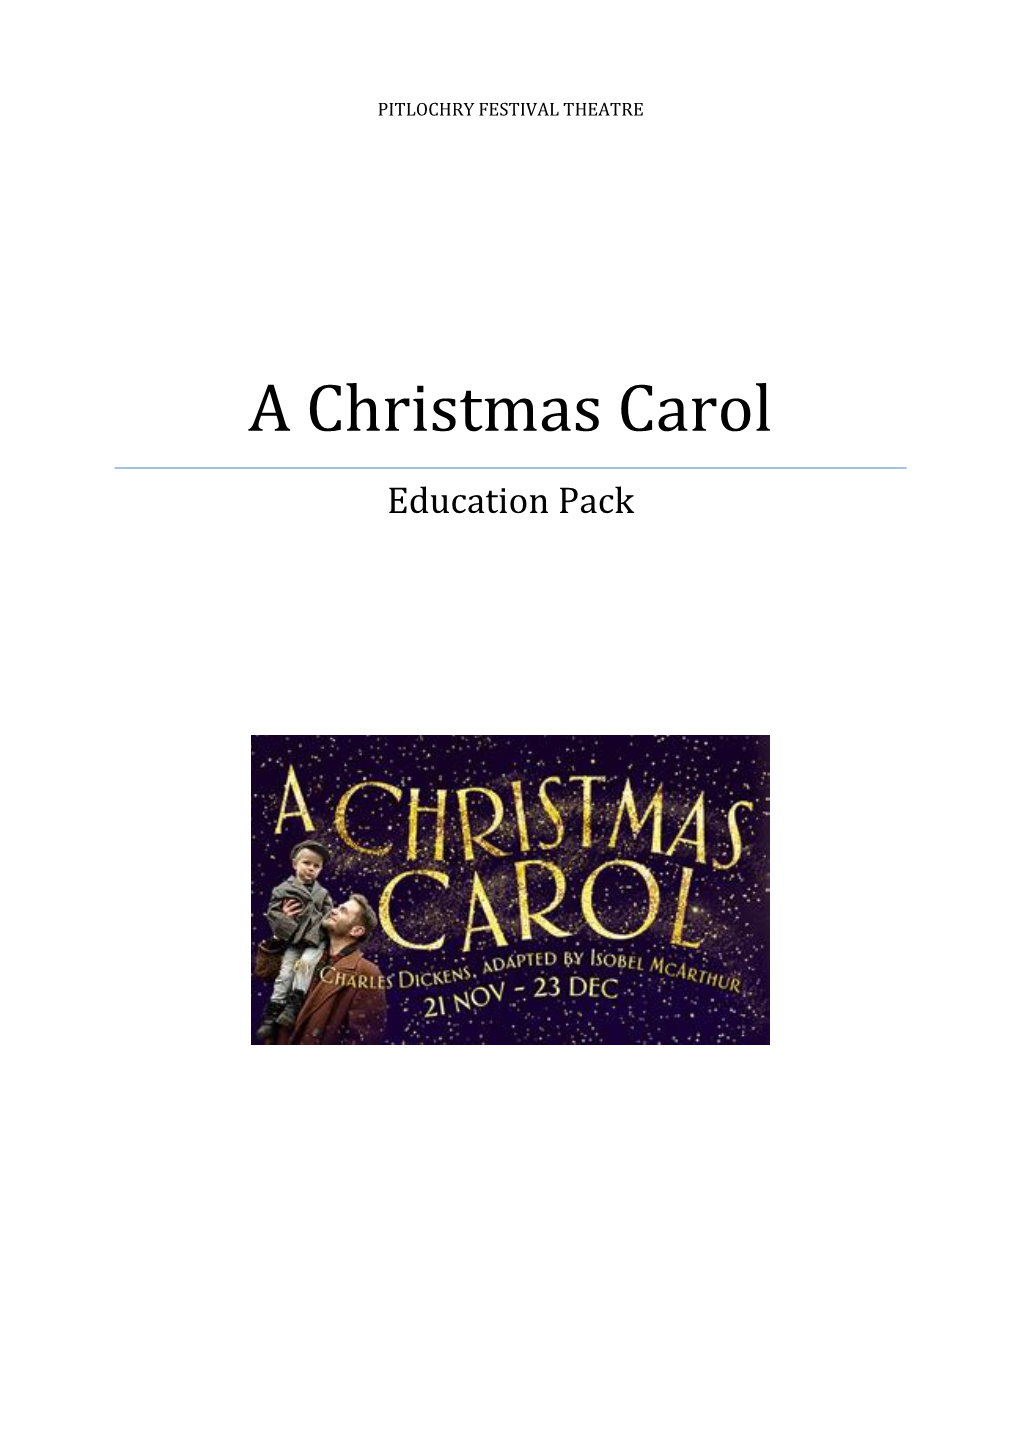 A Christmas Carol Education Pack